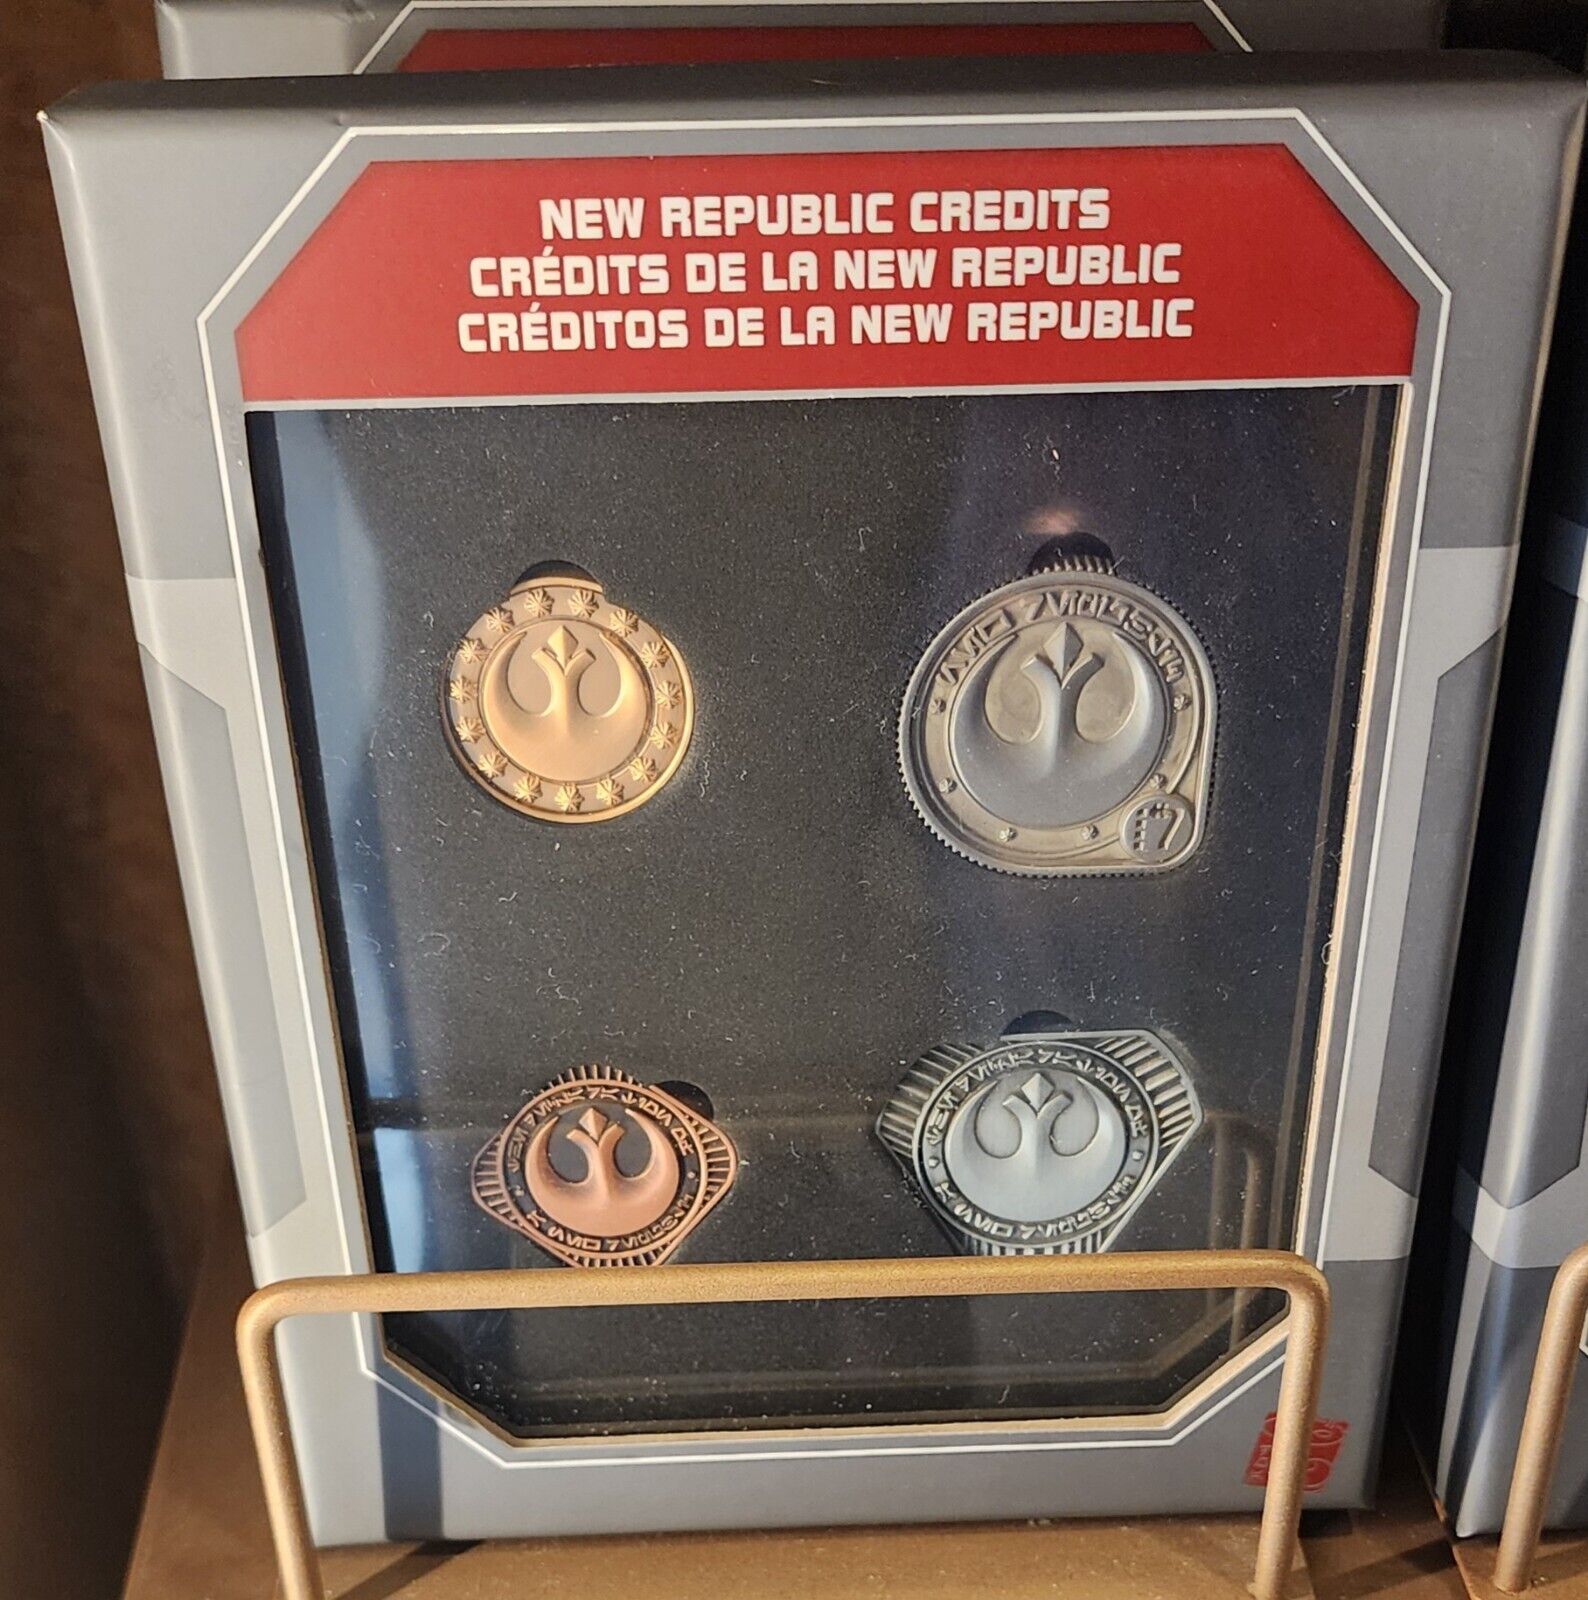 2022 Disney Parks New Republic Credits Star Wars Galaxys Edge Coins Cosplay New